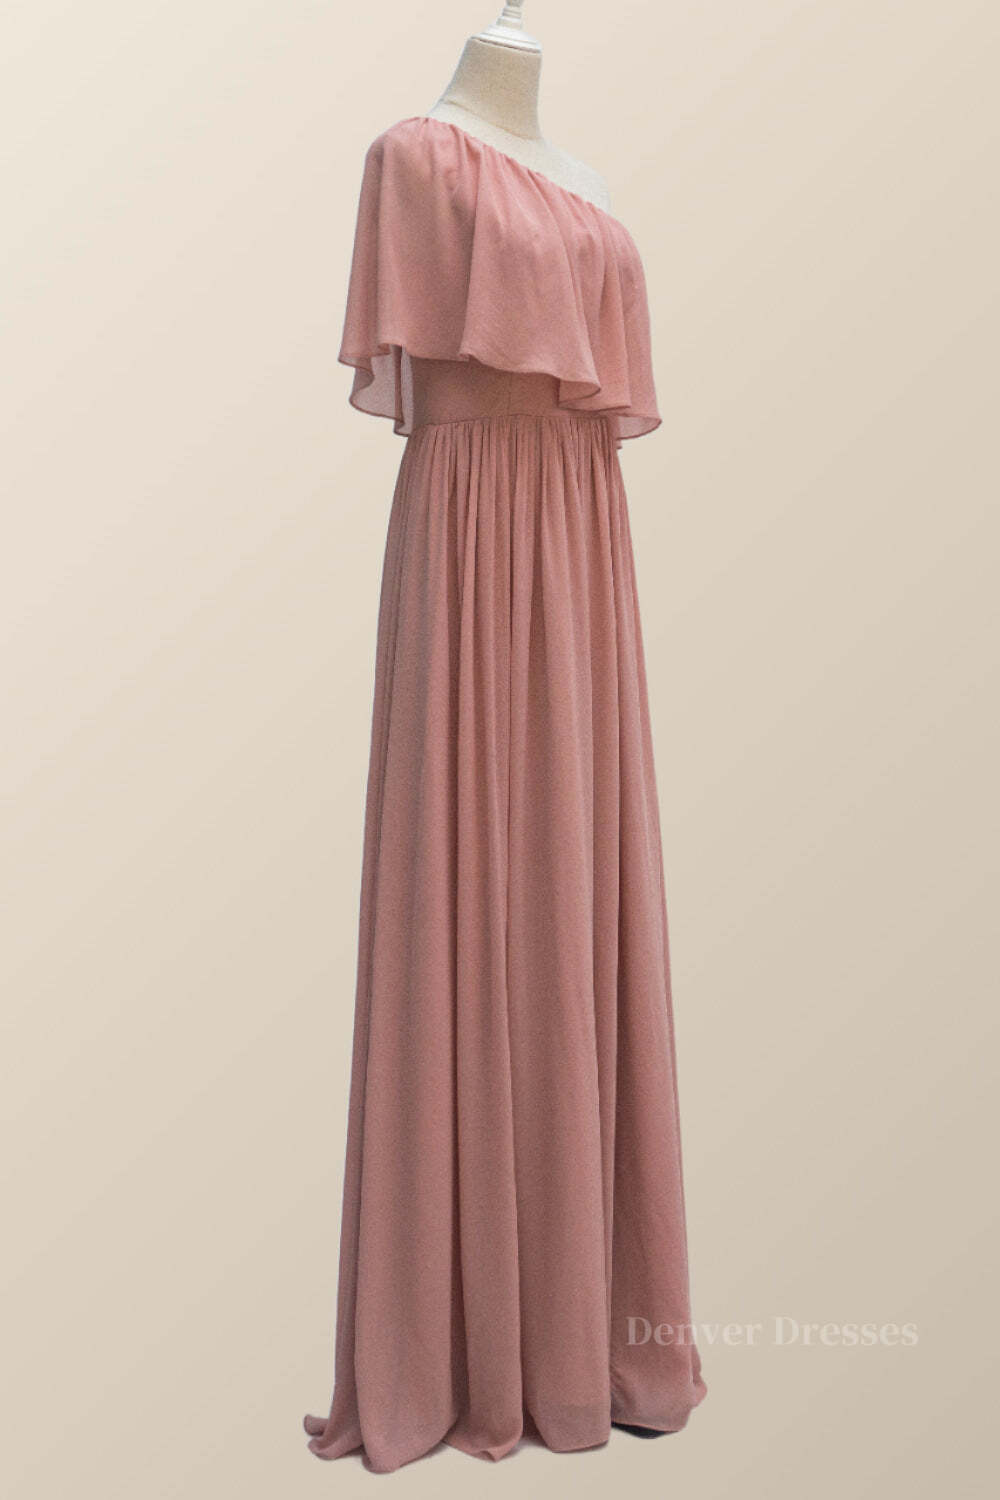 Evening Dresses Formal, One Shoulder Blush Pink Chiffon Crepe Bridesmaid Dress